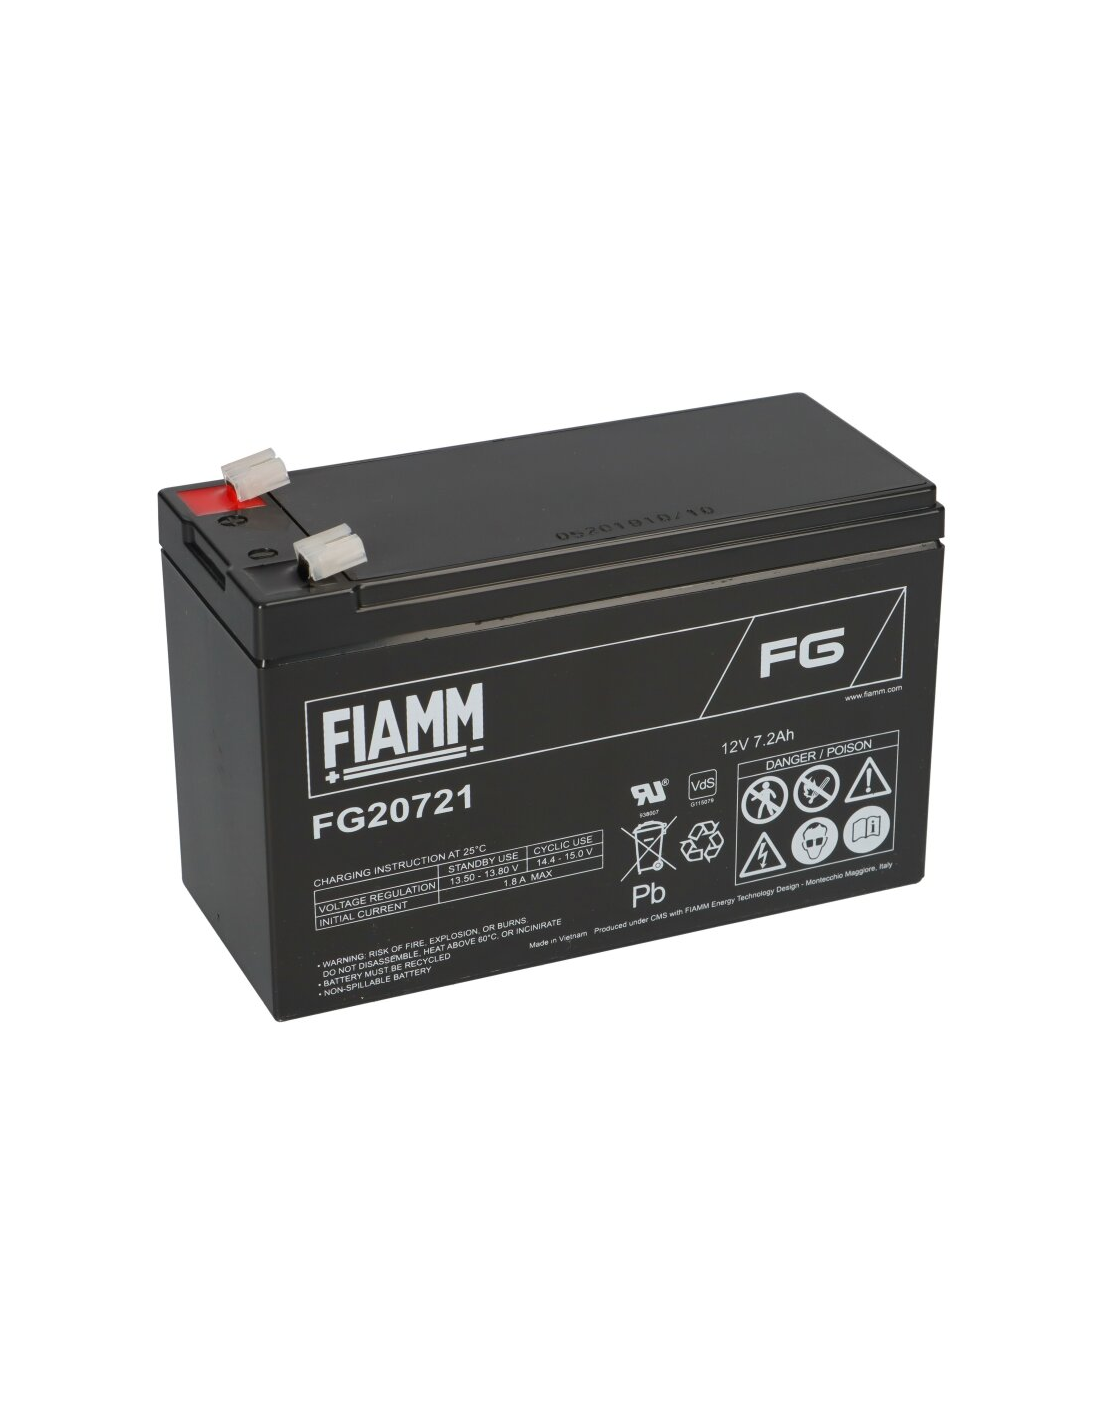 Lead acid battery 12V 7,2Ah - Fiamm FG20721